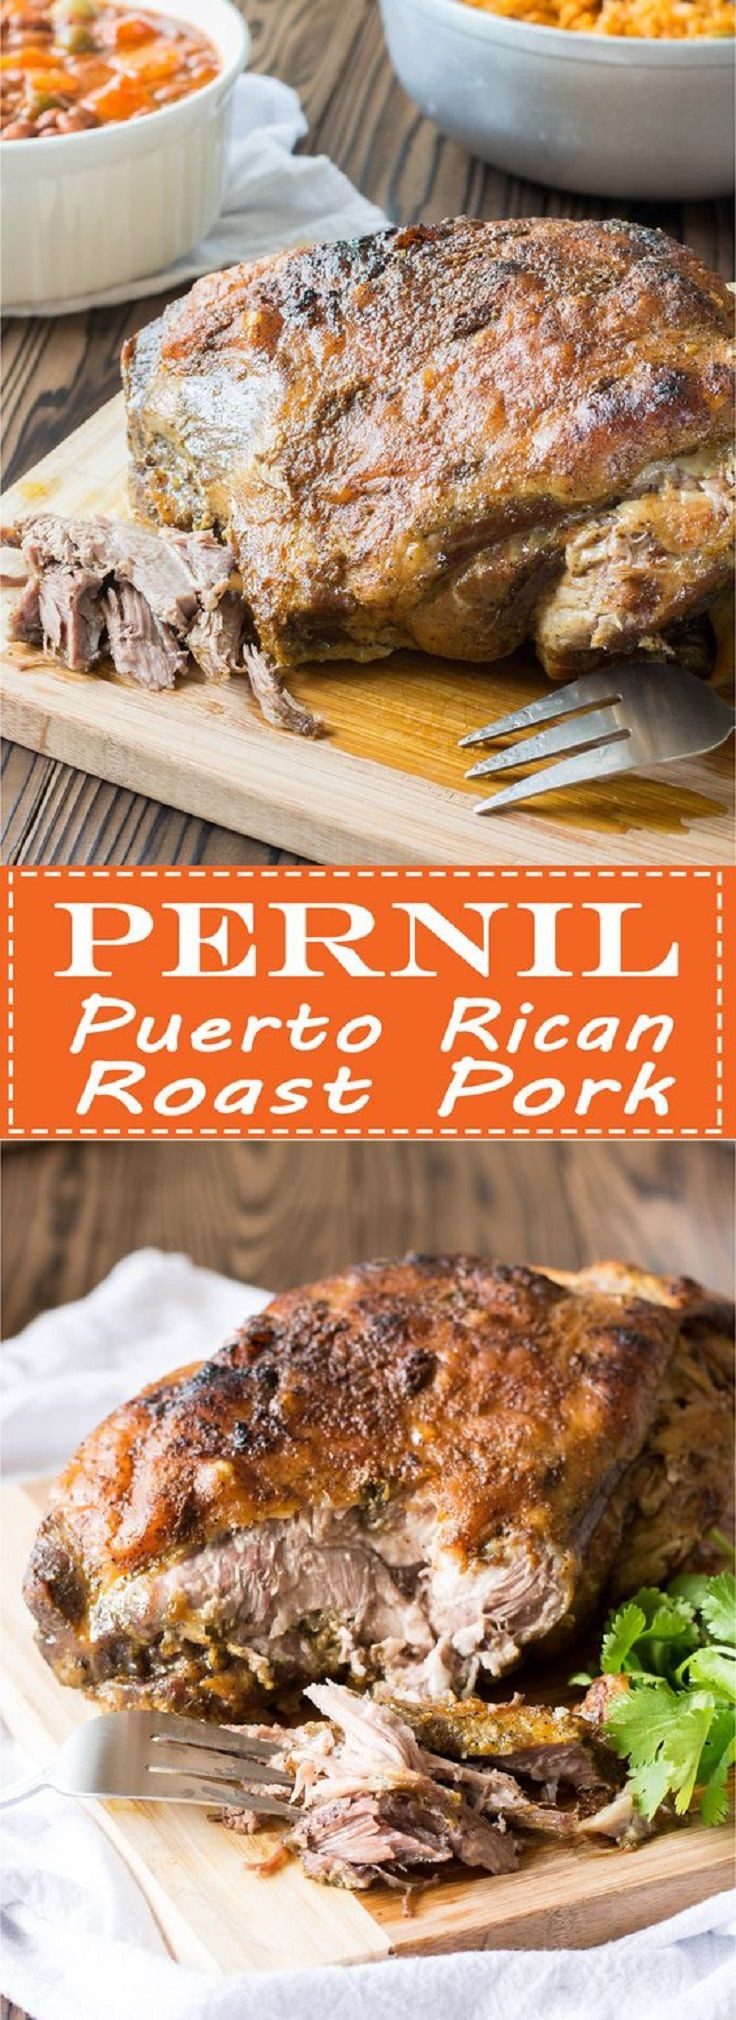 Puerto Rican Easter Dinner
 Puerto Rican Pernil Roast Pork 17 Easter Dinner Ideas